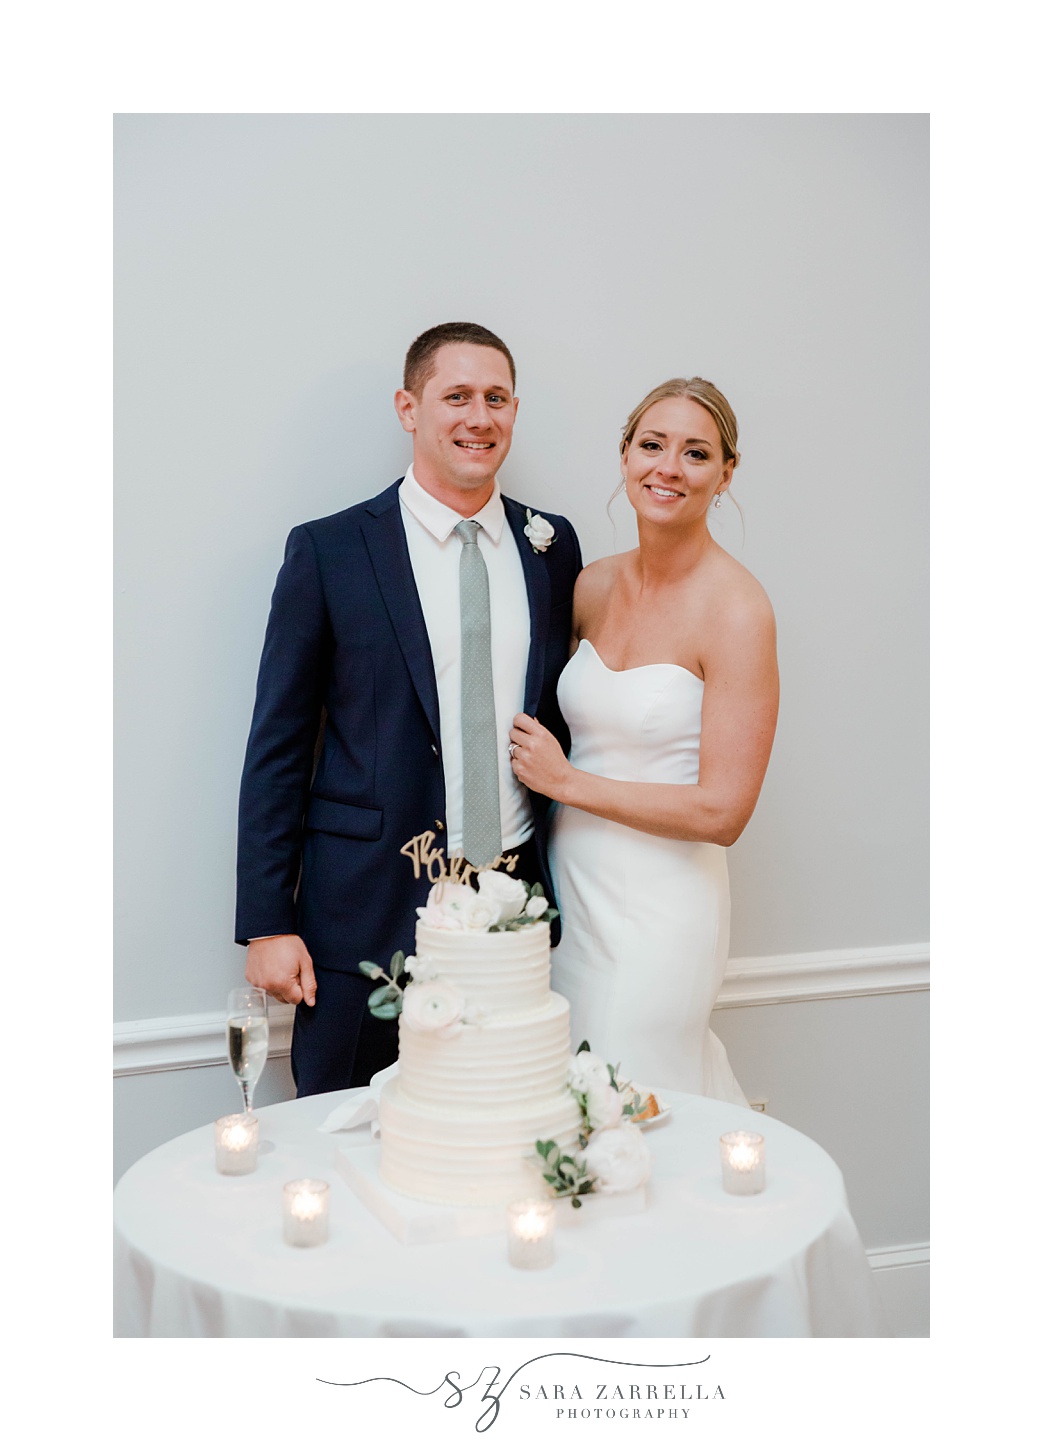 newlyweds pose by wedding cake during Newport RI wedding reception 